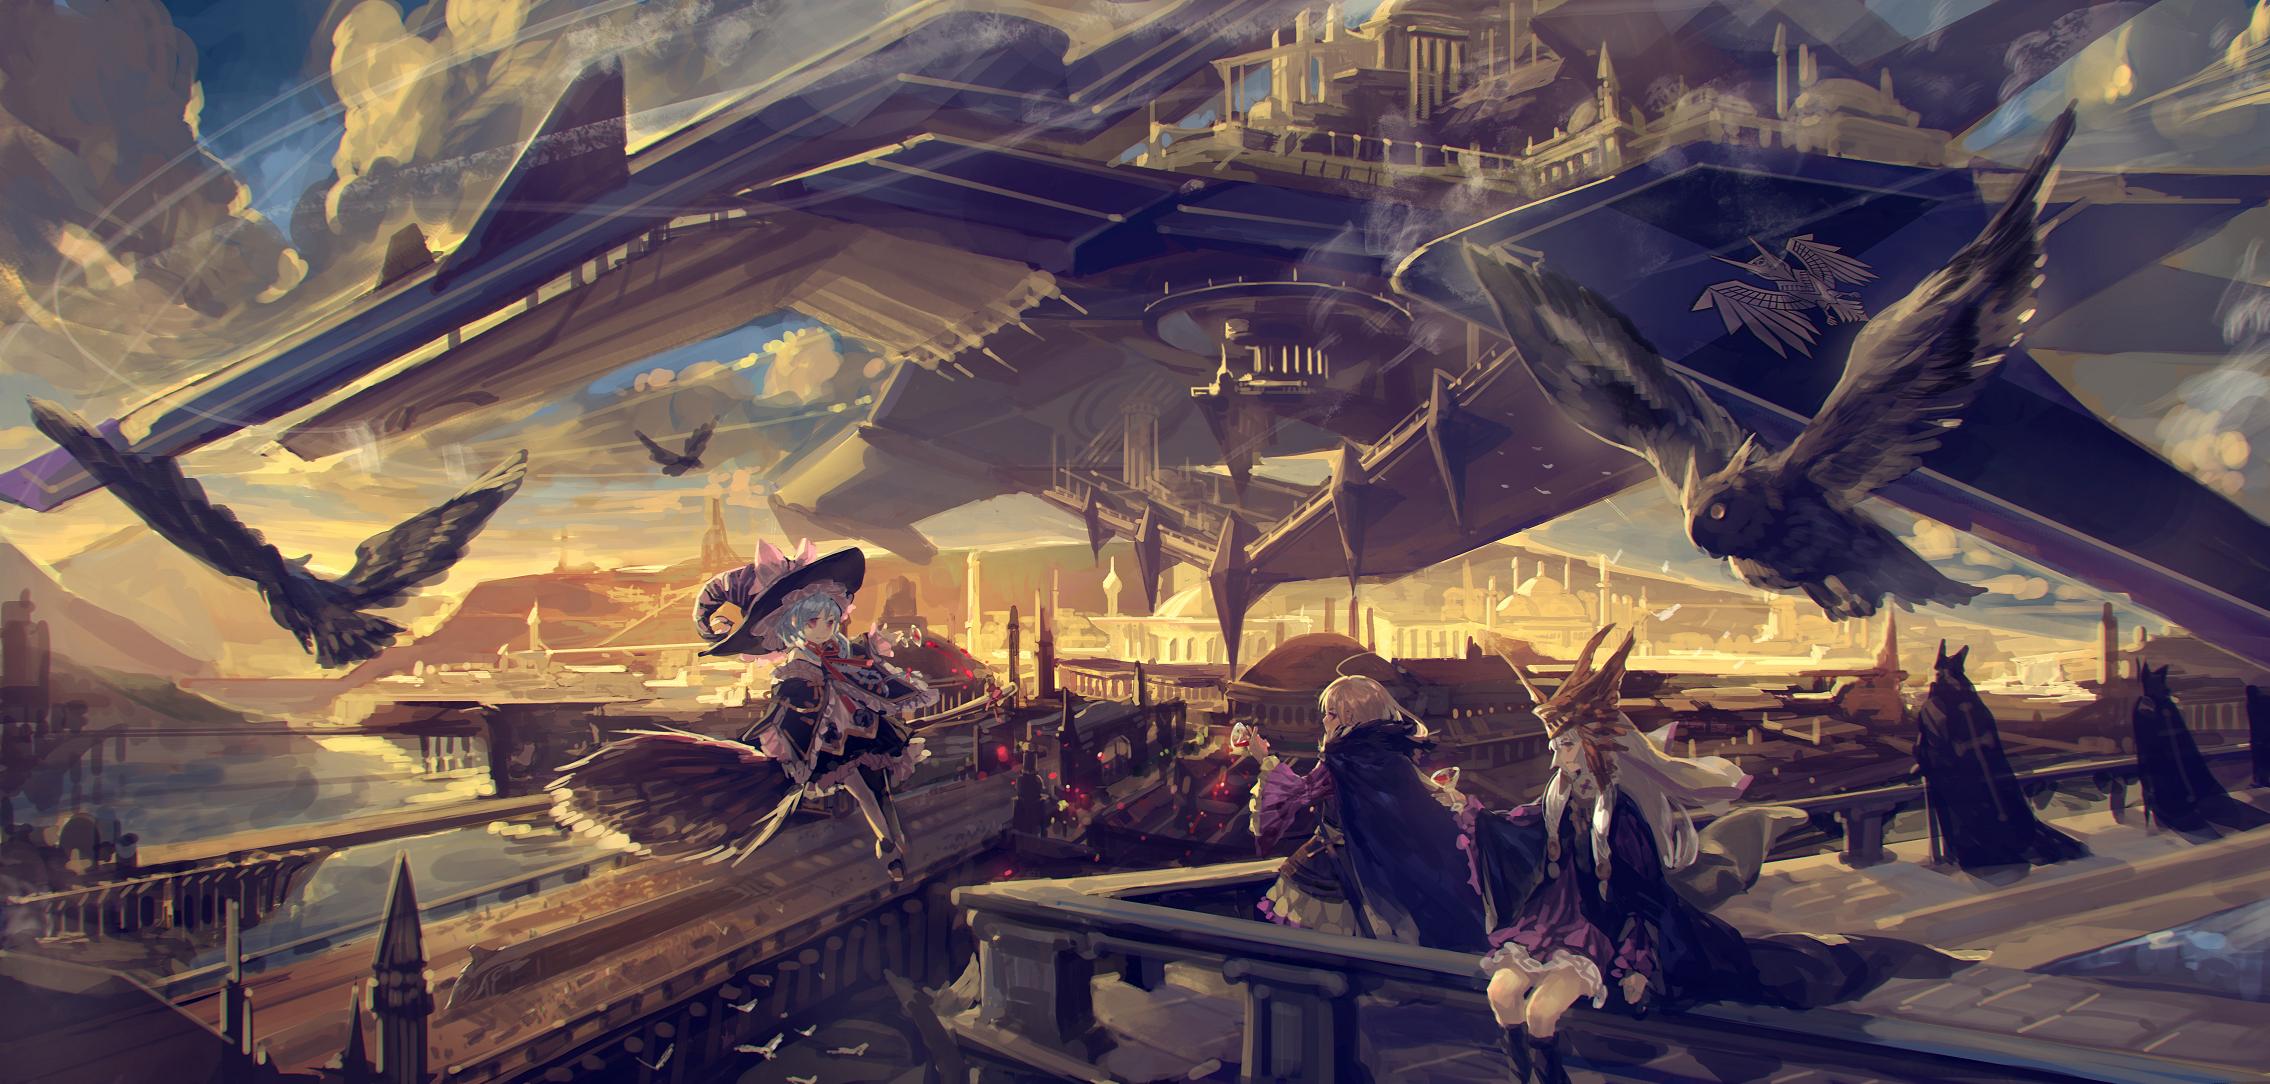 Anime Pixiv Fantasia: New World HD Wallpaper | Background Image